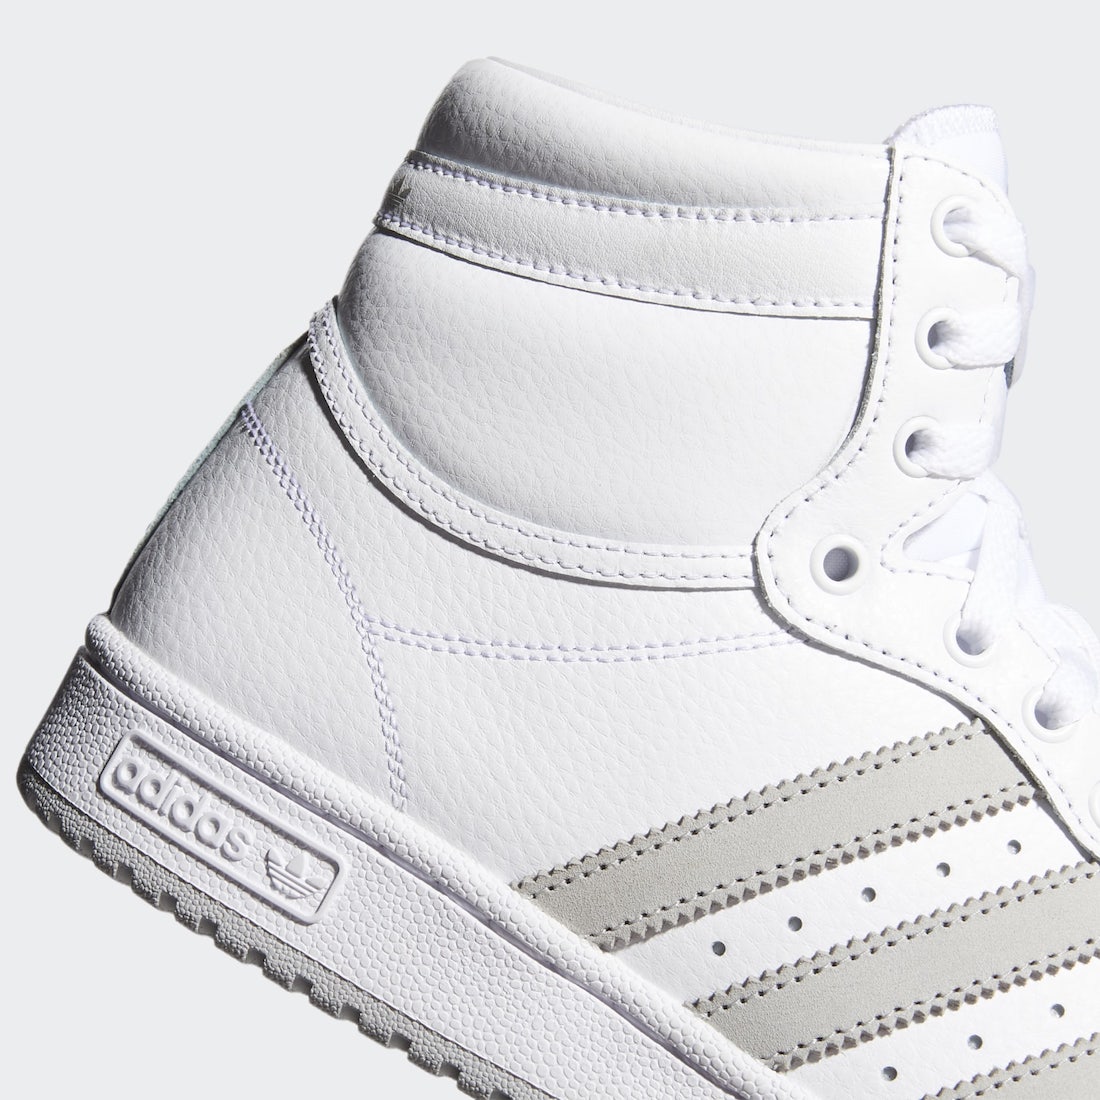 adidas Top Ten White Grey FY7096 Release Date